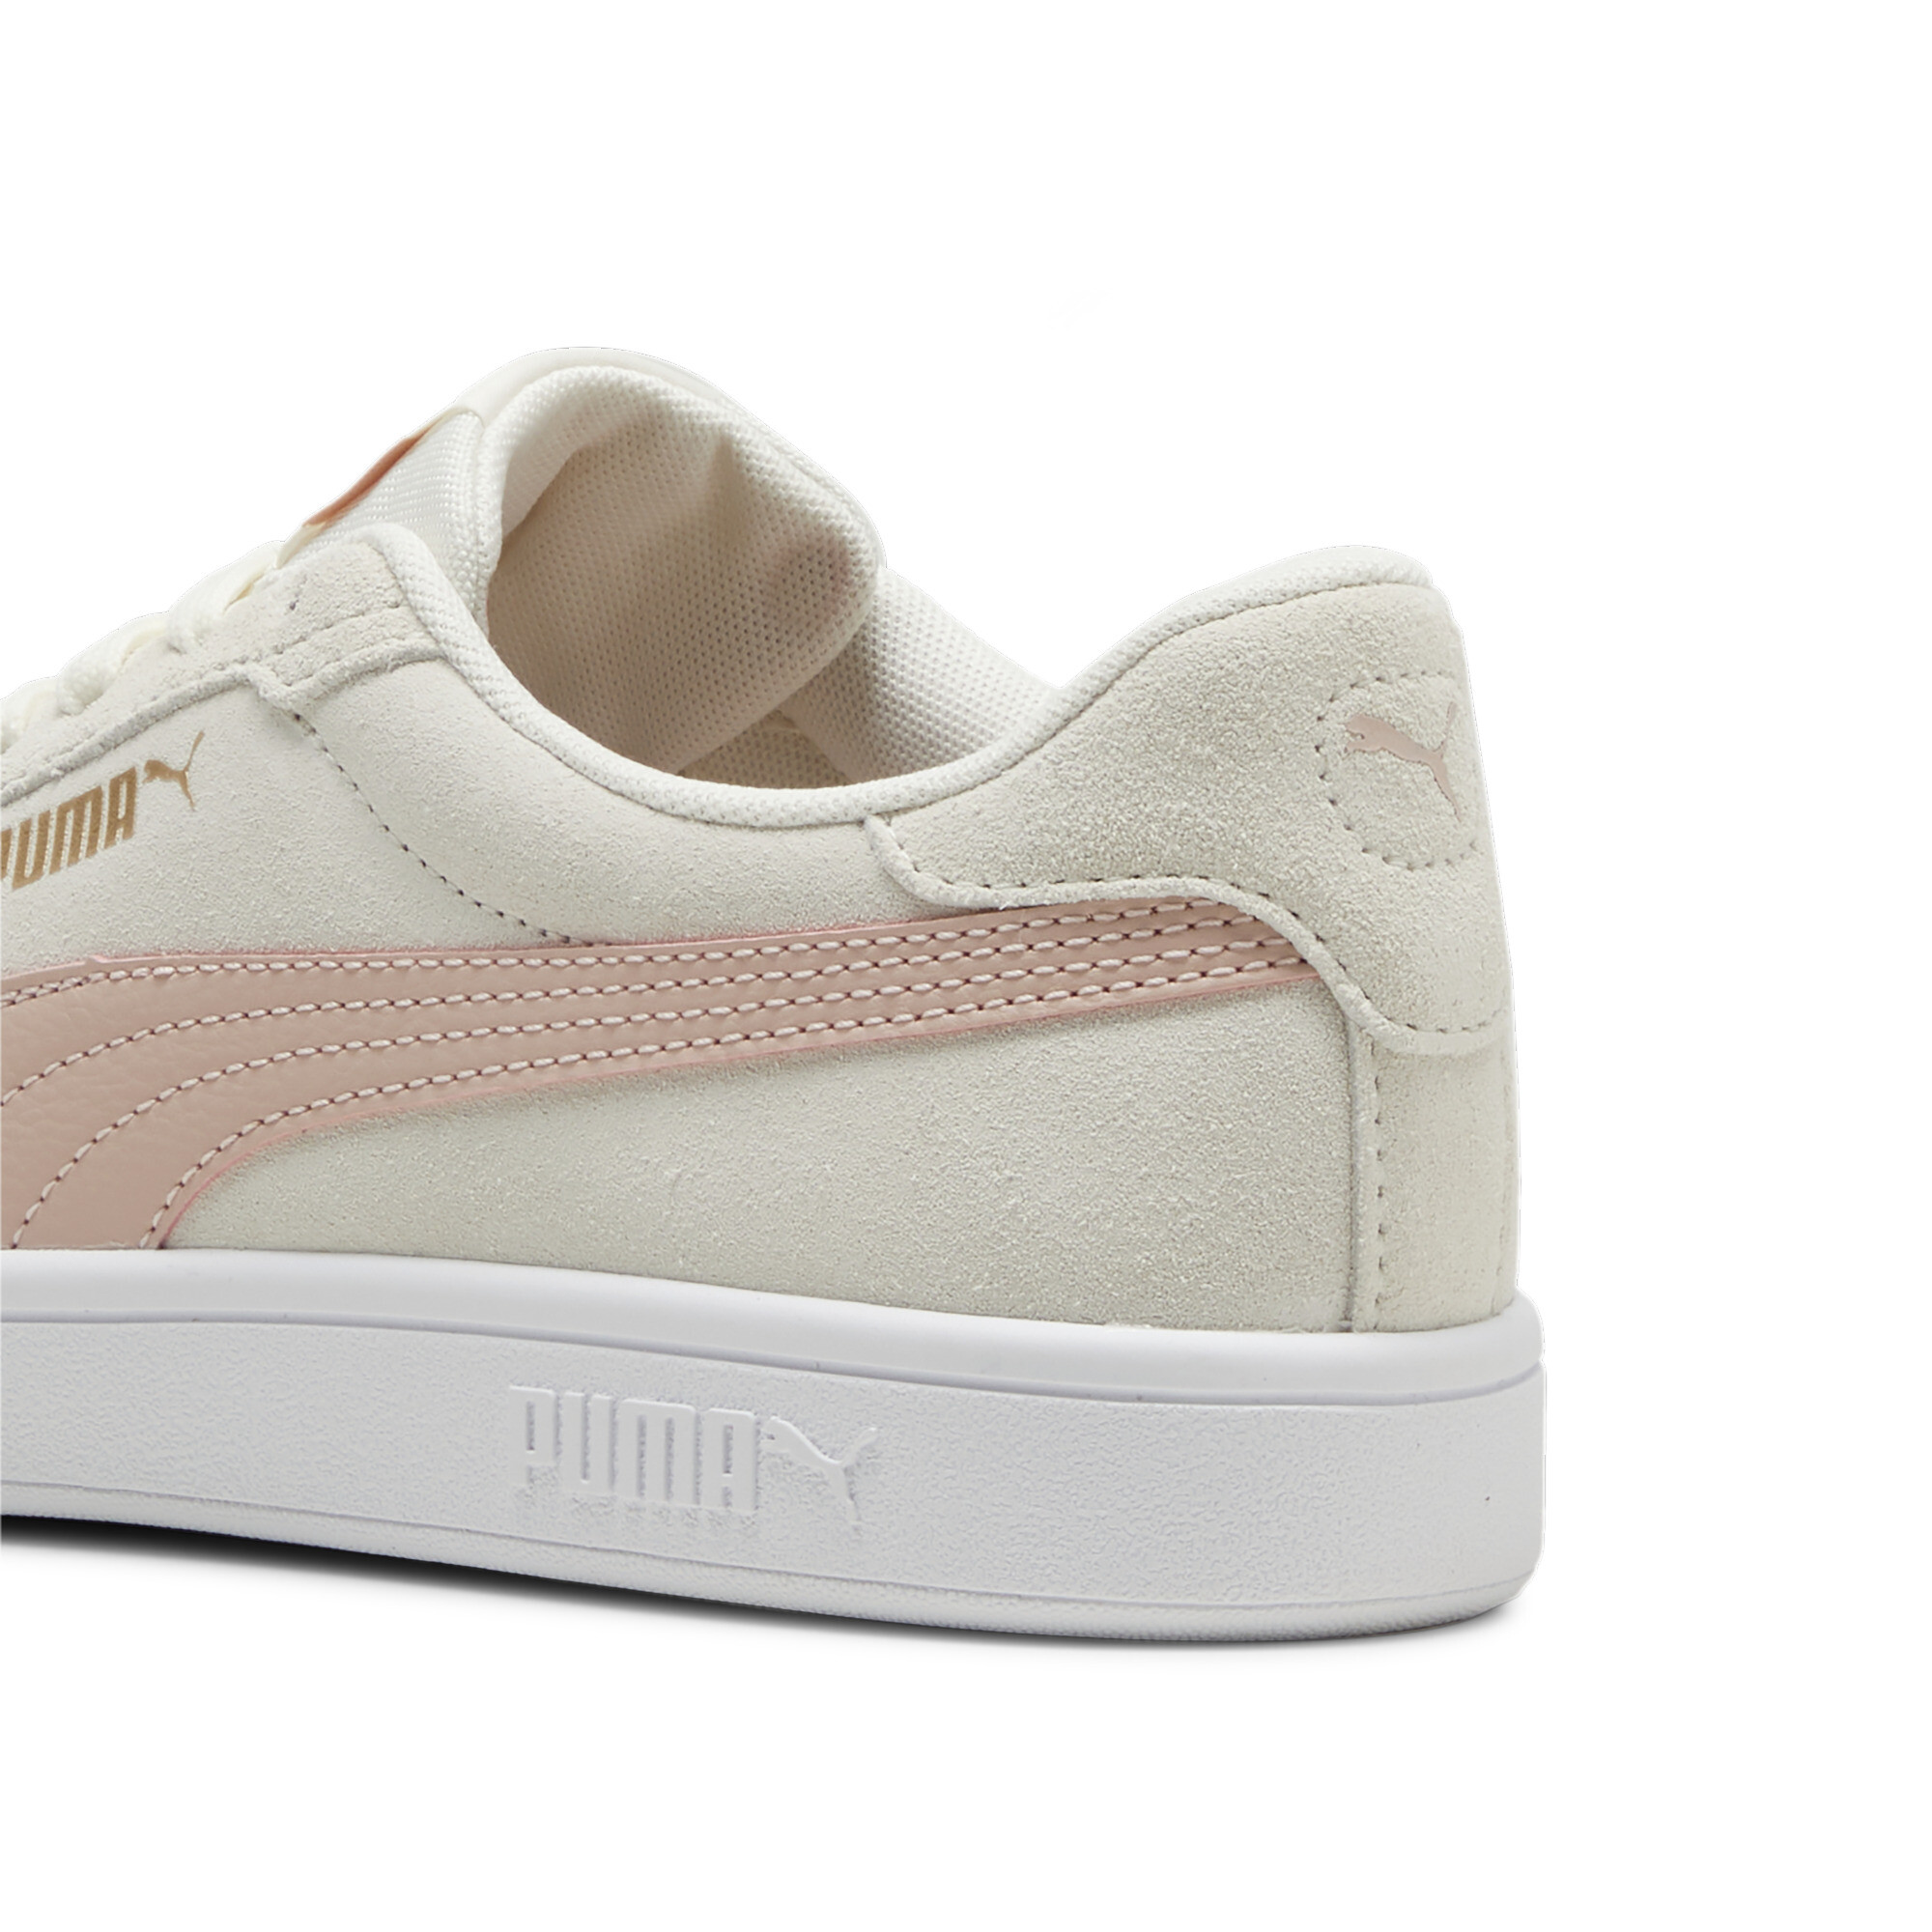 Puma Smash 3.0 Sneakers, White, Size 38, Shoes